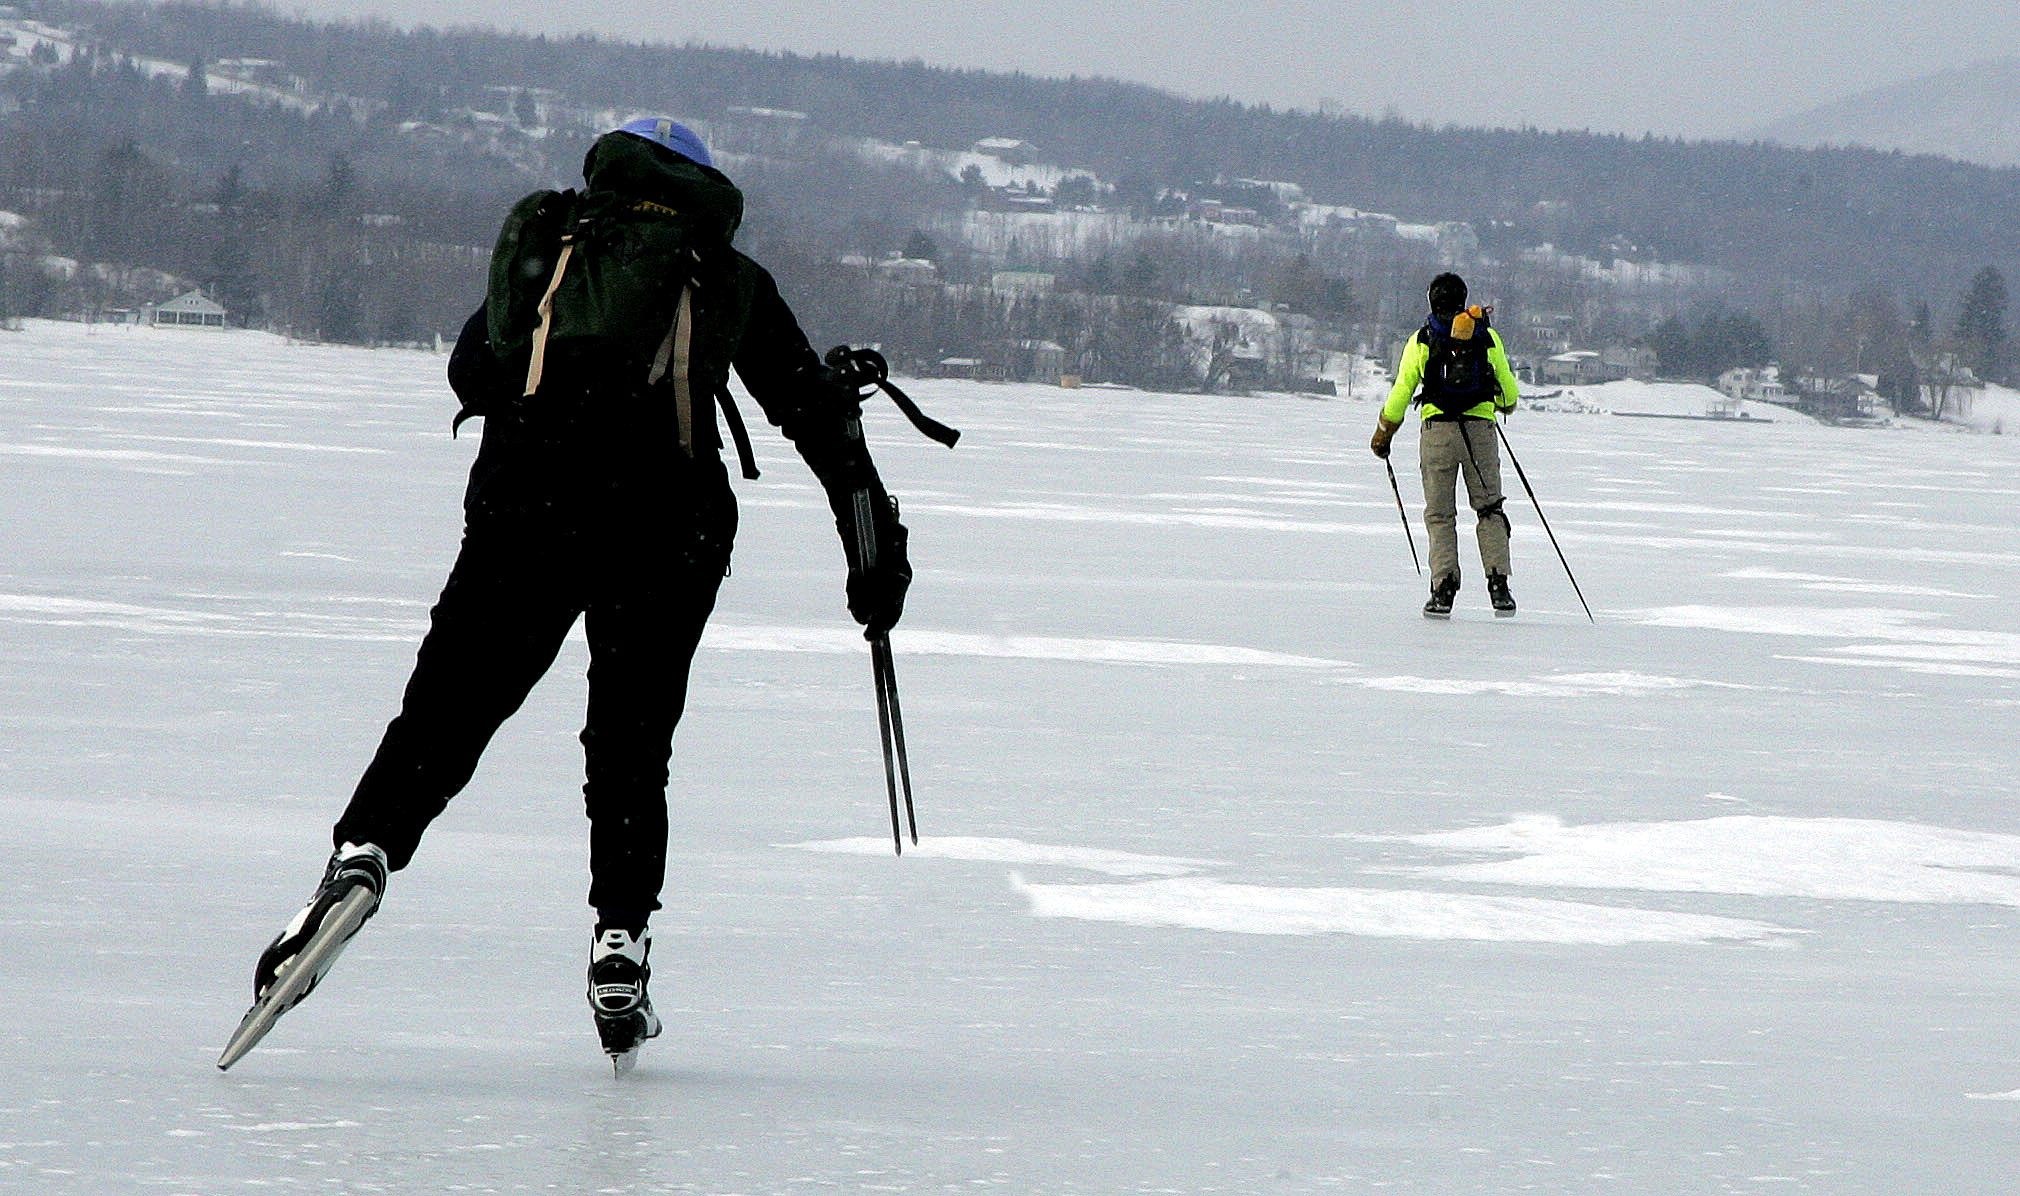 Ice skis